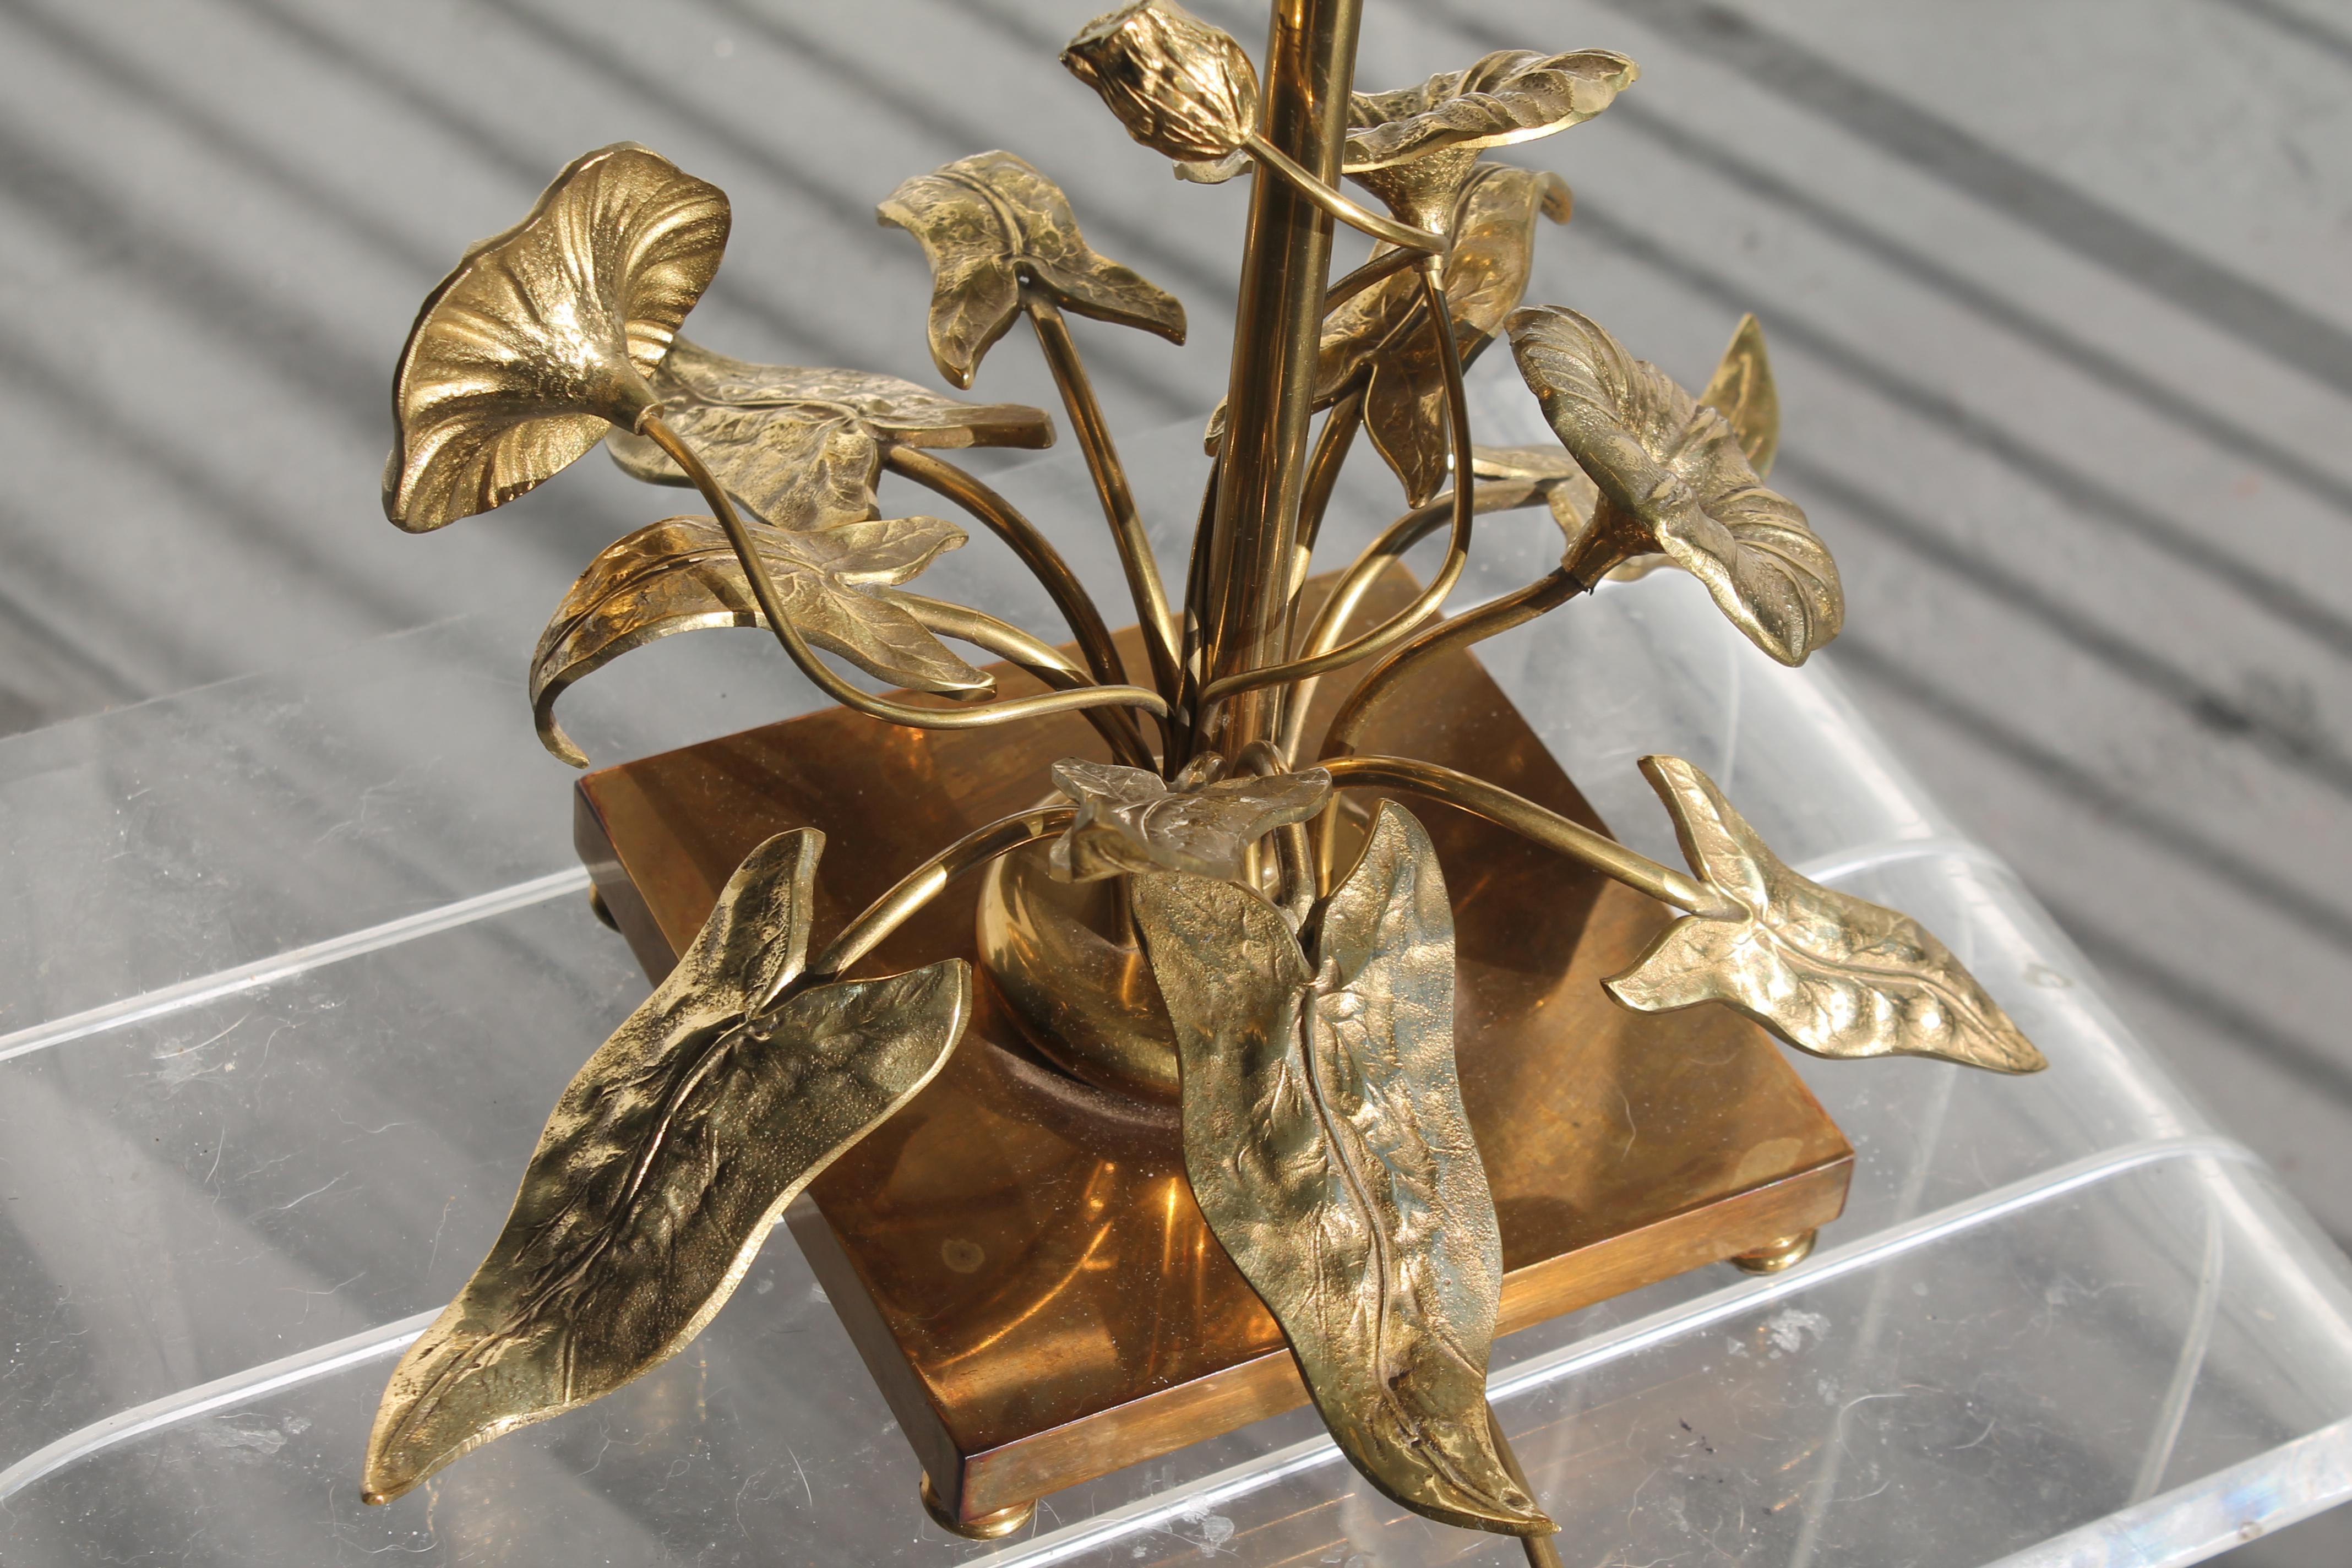 1960s French Mid Century Modern Gilt Bronze FloralTable Lamp att. Maison Charles For Sale 3